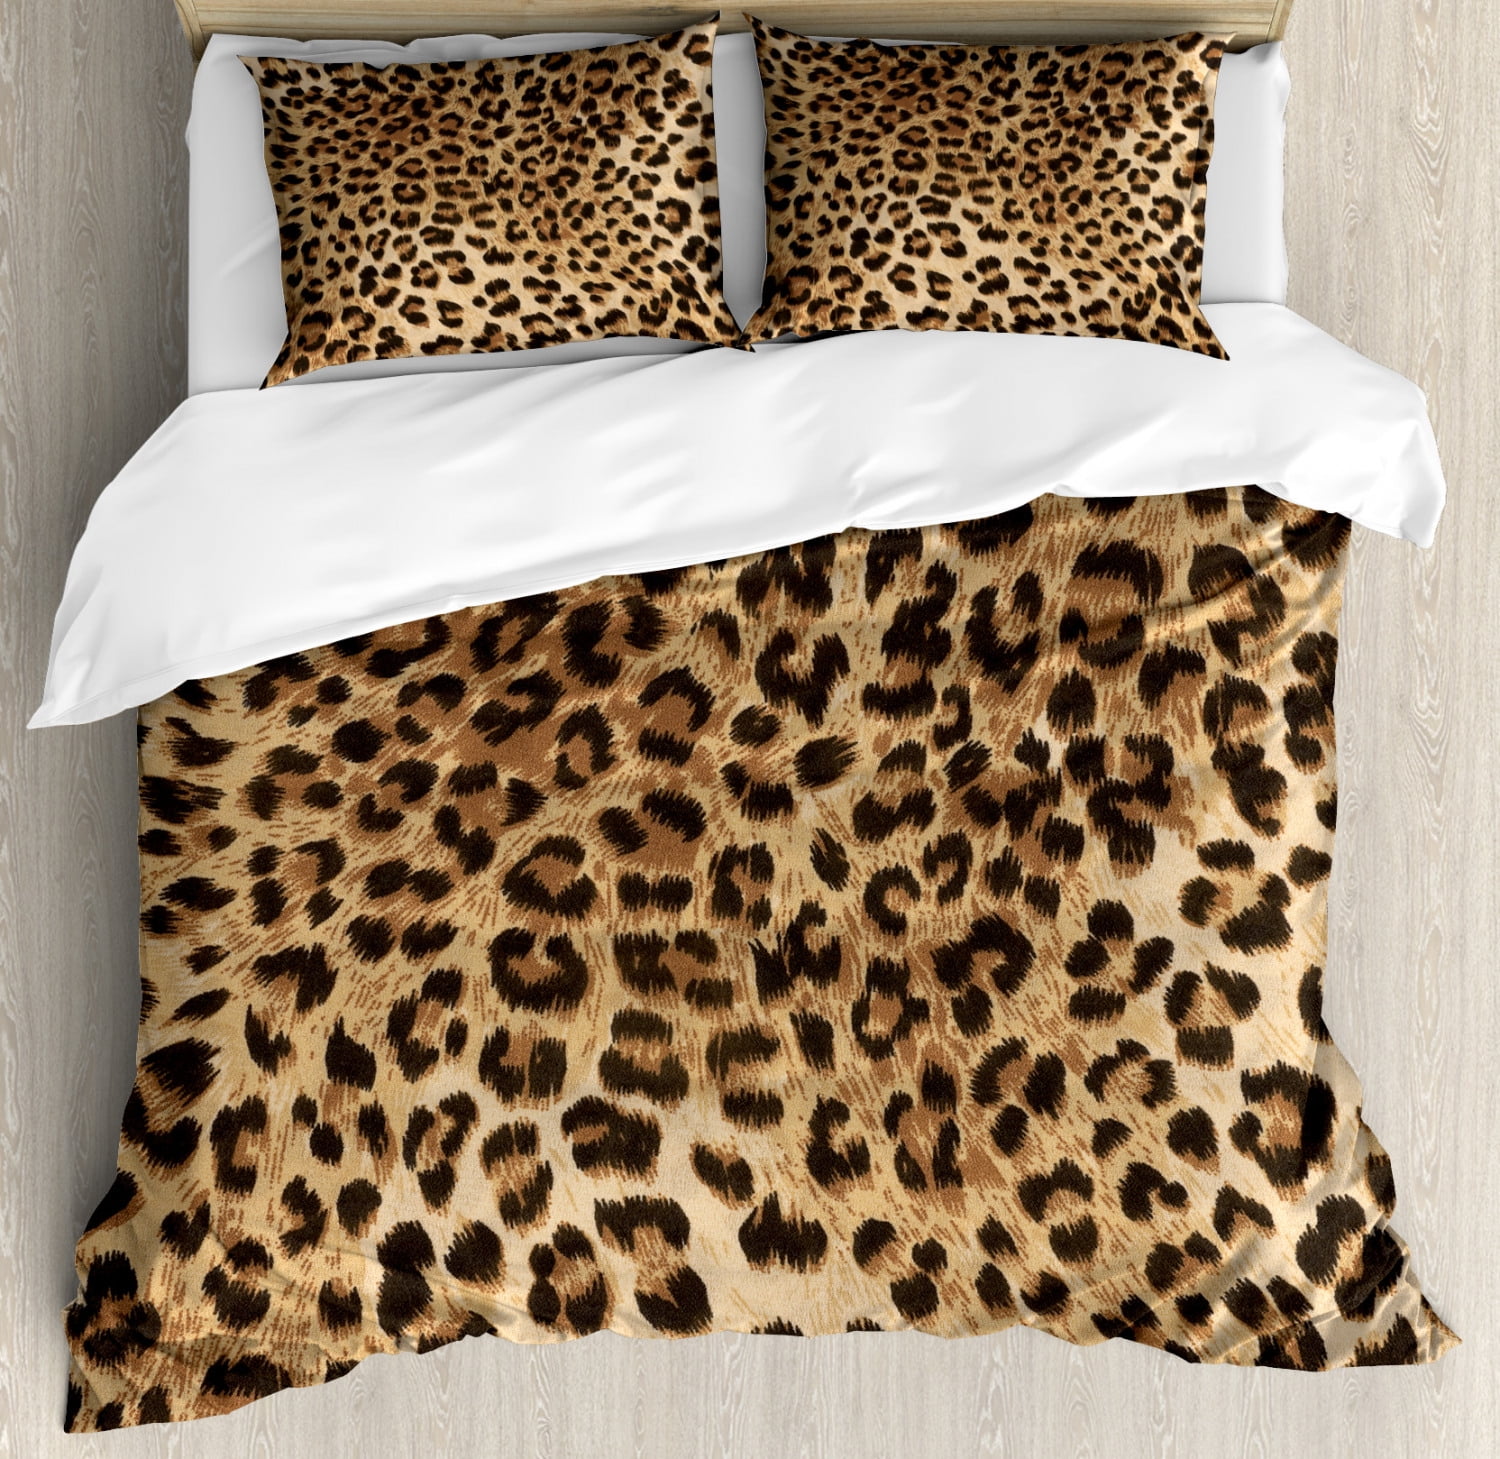 Full Full Size Duvet Cover Sets Encoft 3D Leopard Bedding 3D African Leopard Walking Through Jungle 4-Piece Black Bedding Sets